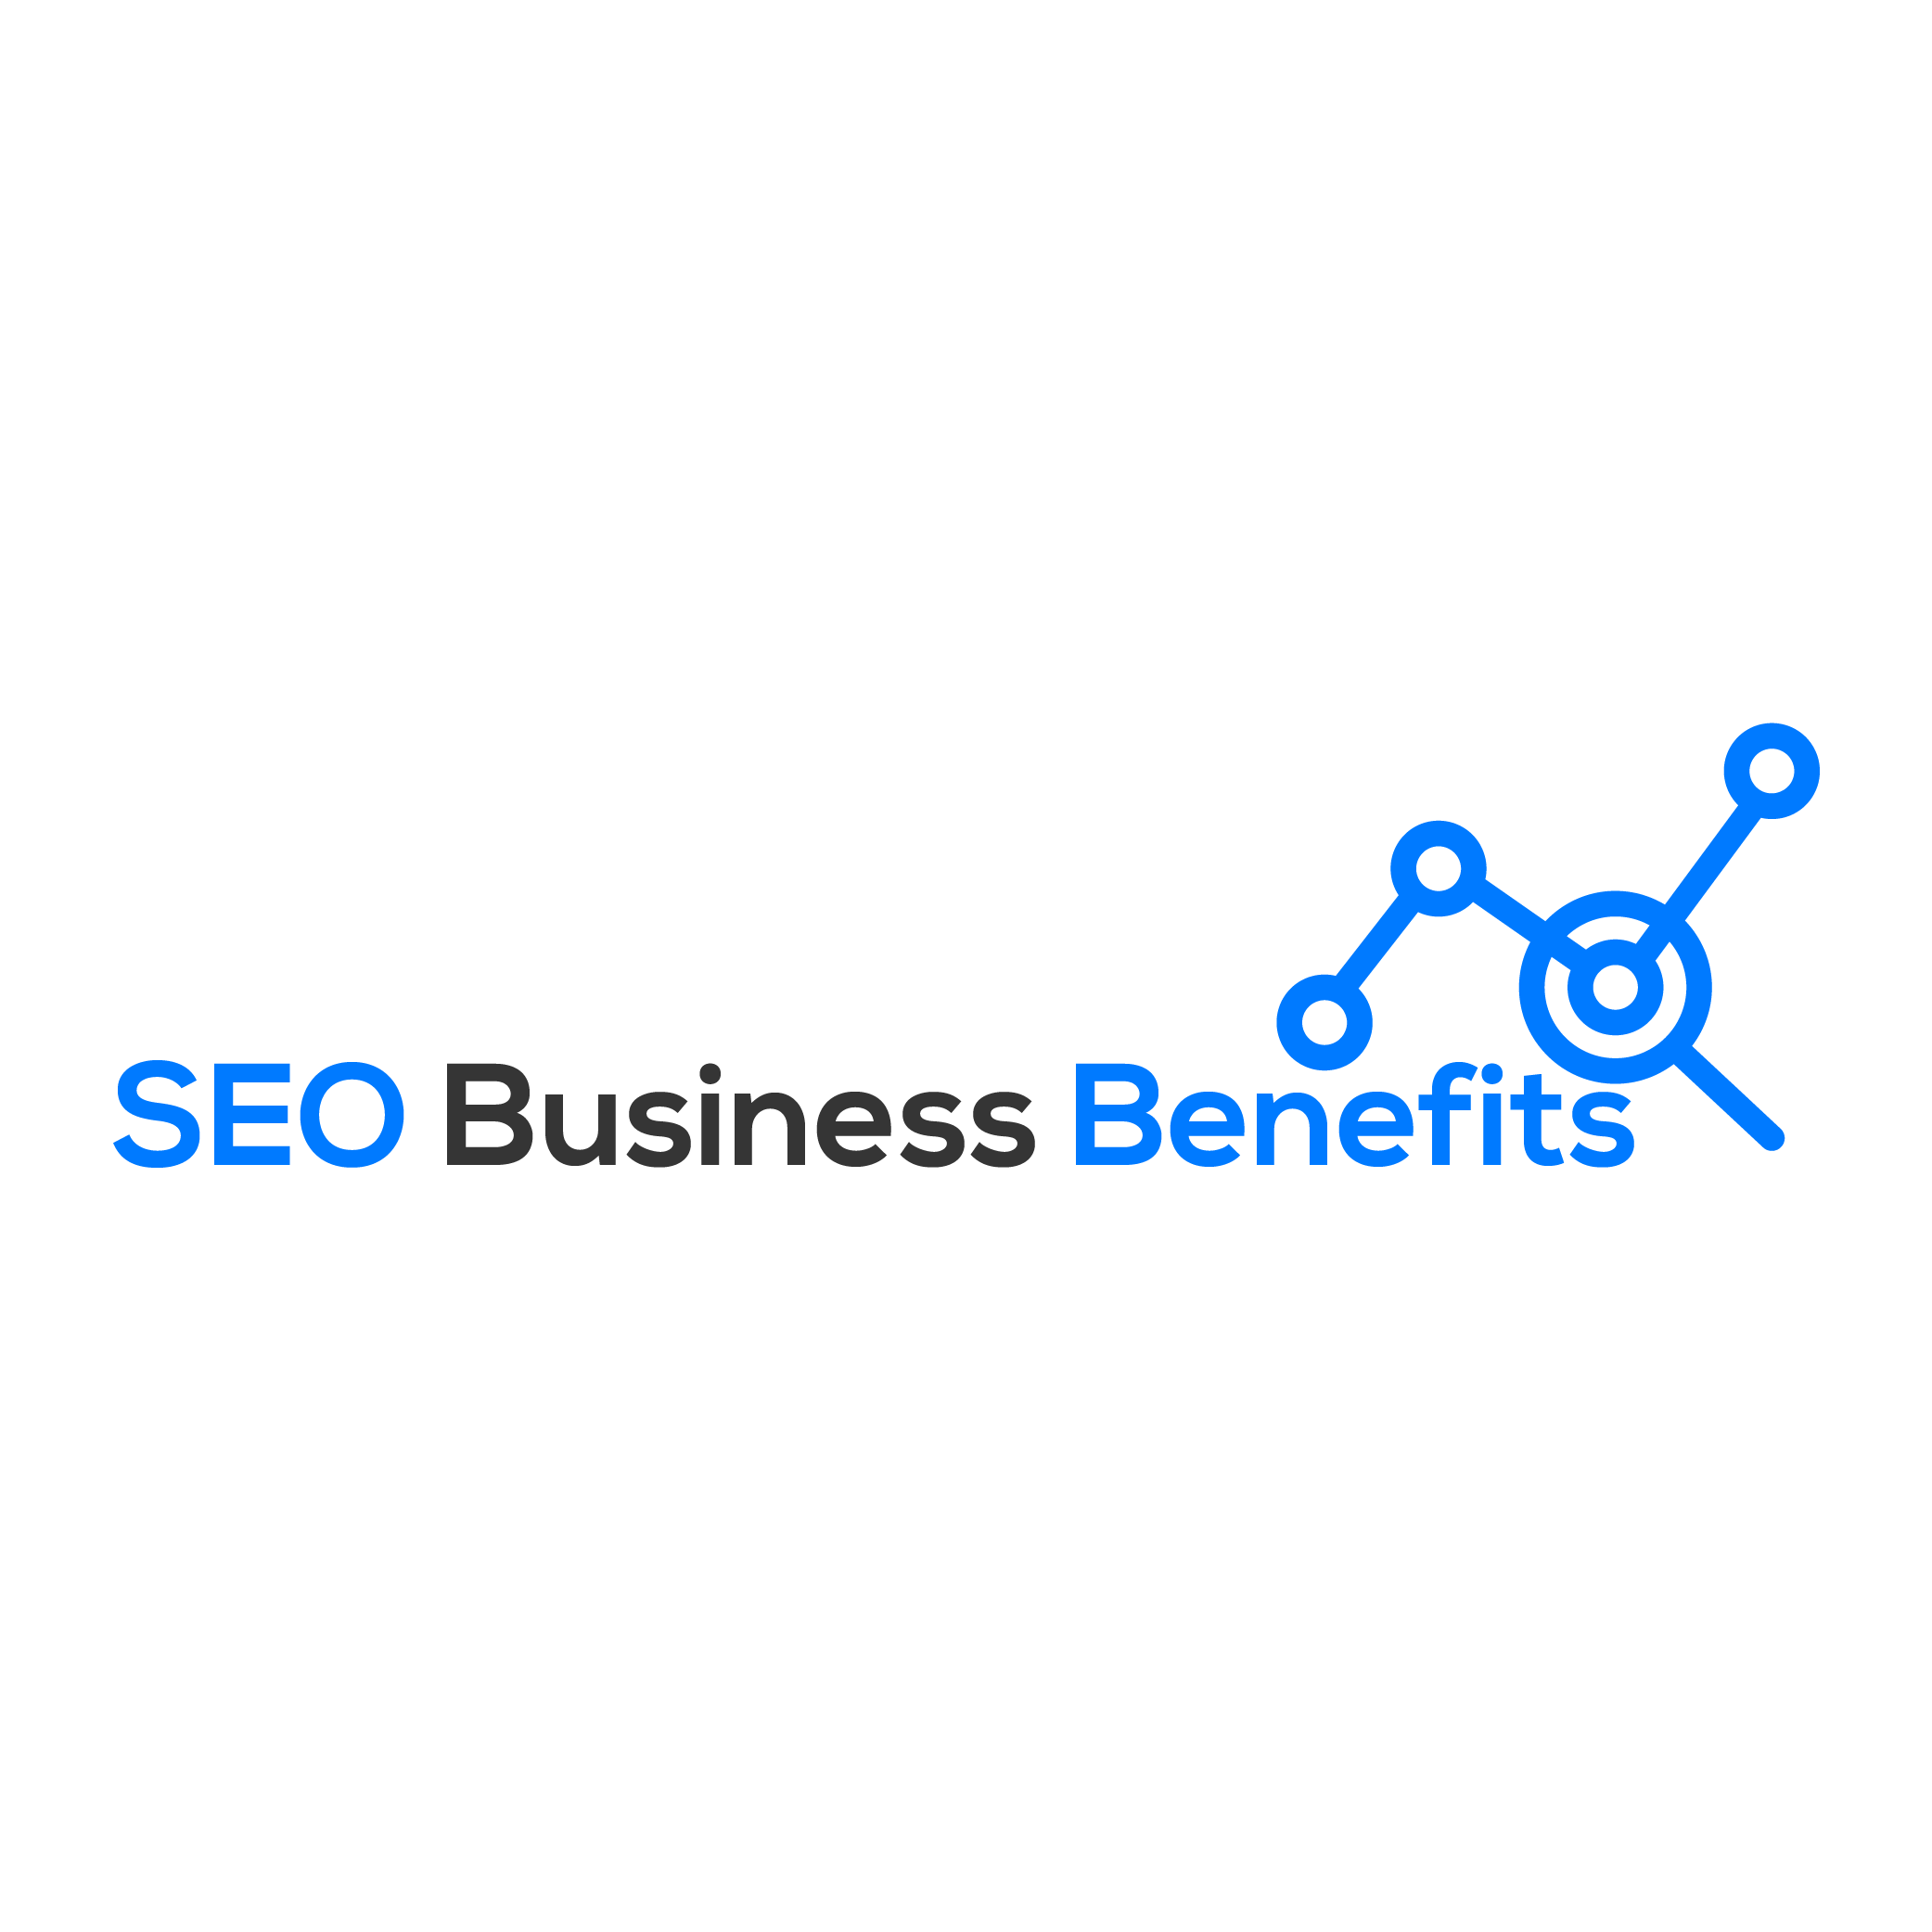 SEO Business Benefits